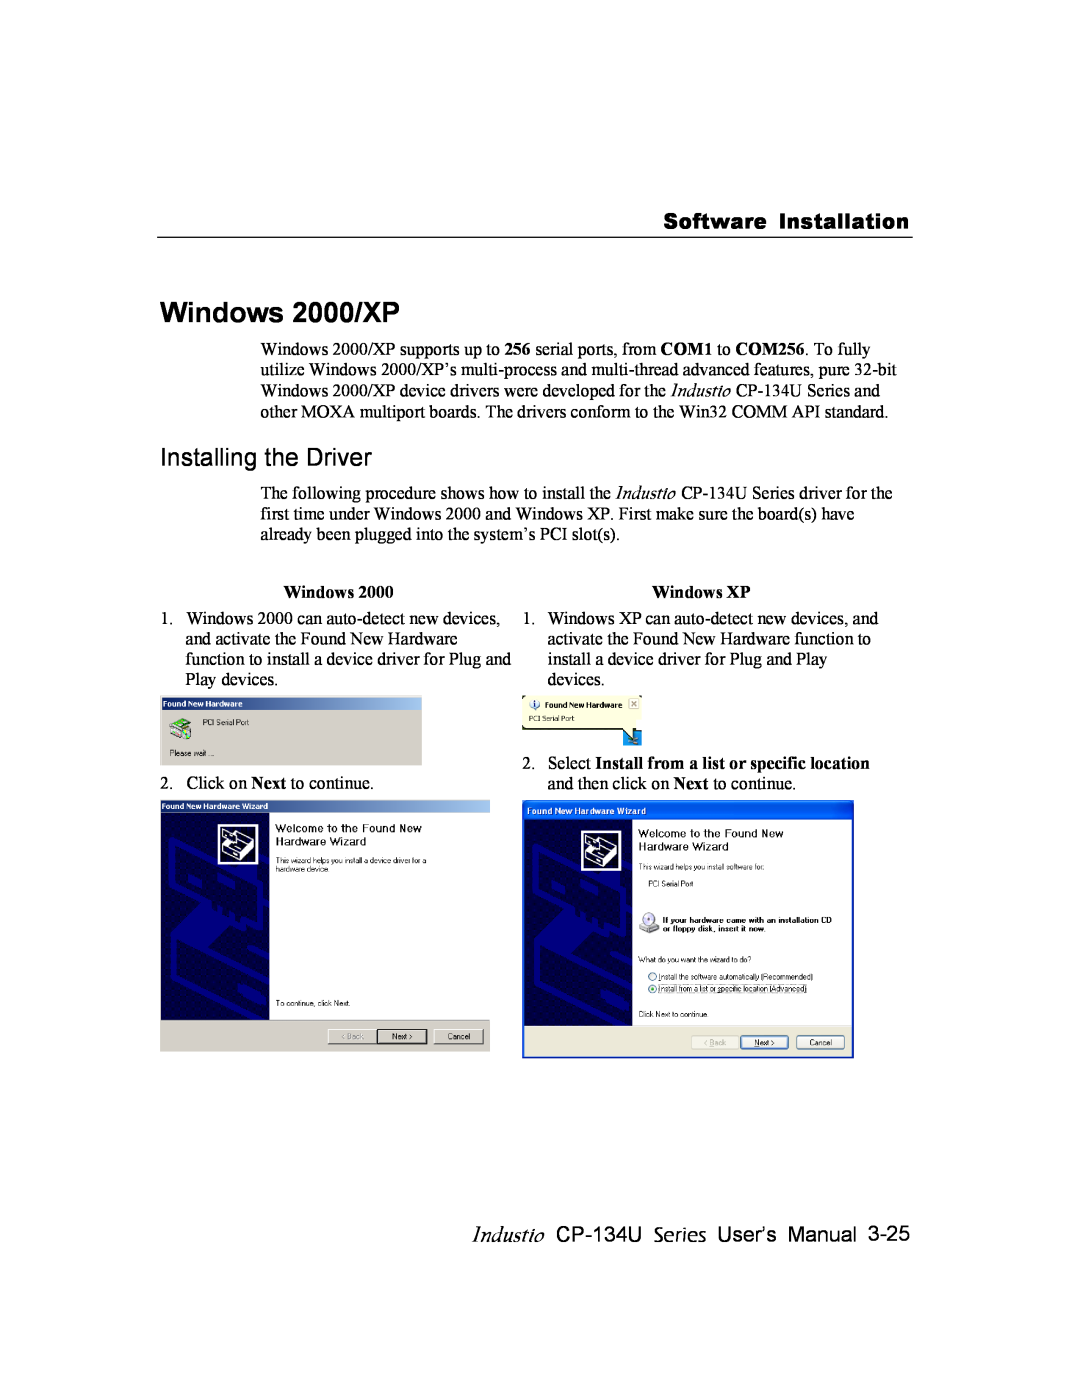 Moxa Technologies CP-134U user manual Windows 2000/XP, Installing the Driver, Software Installation 